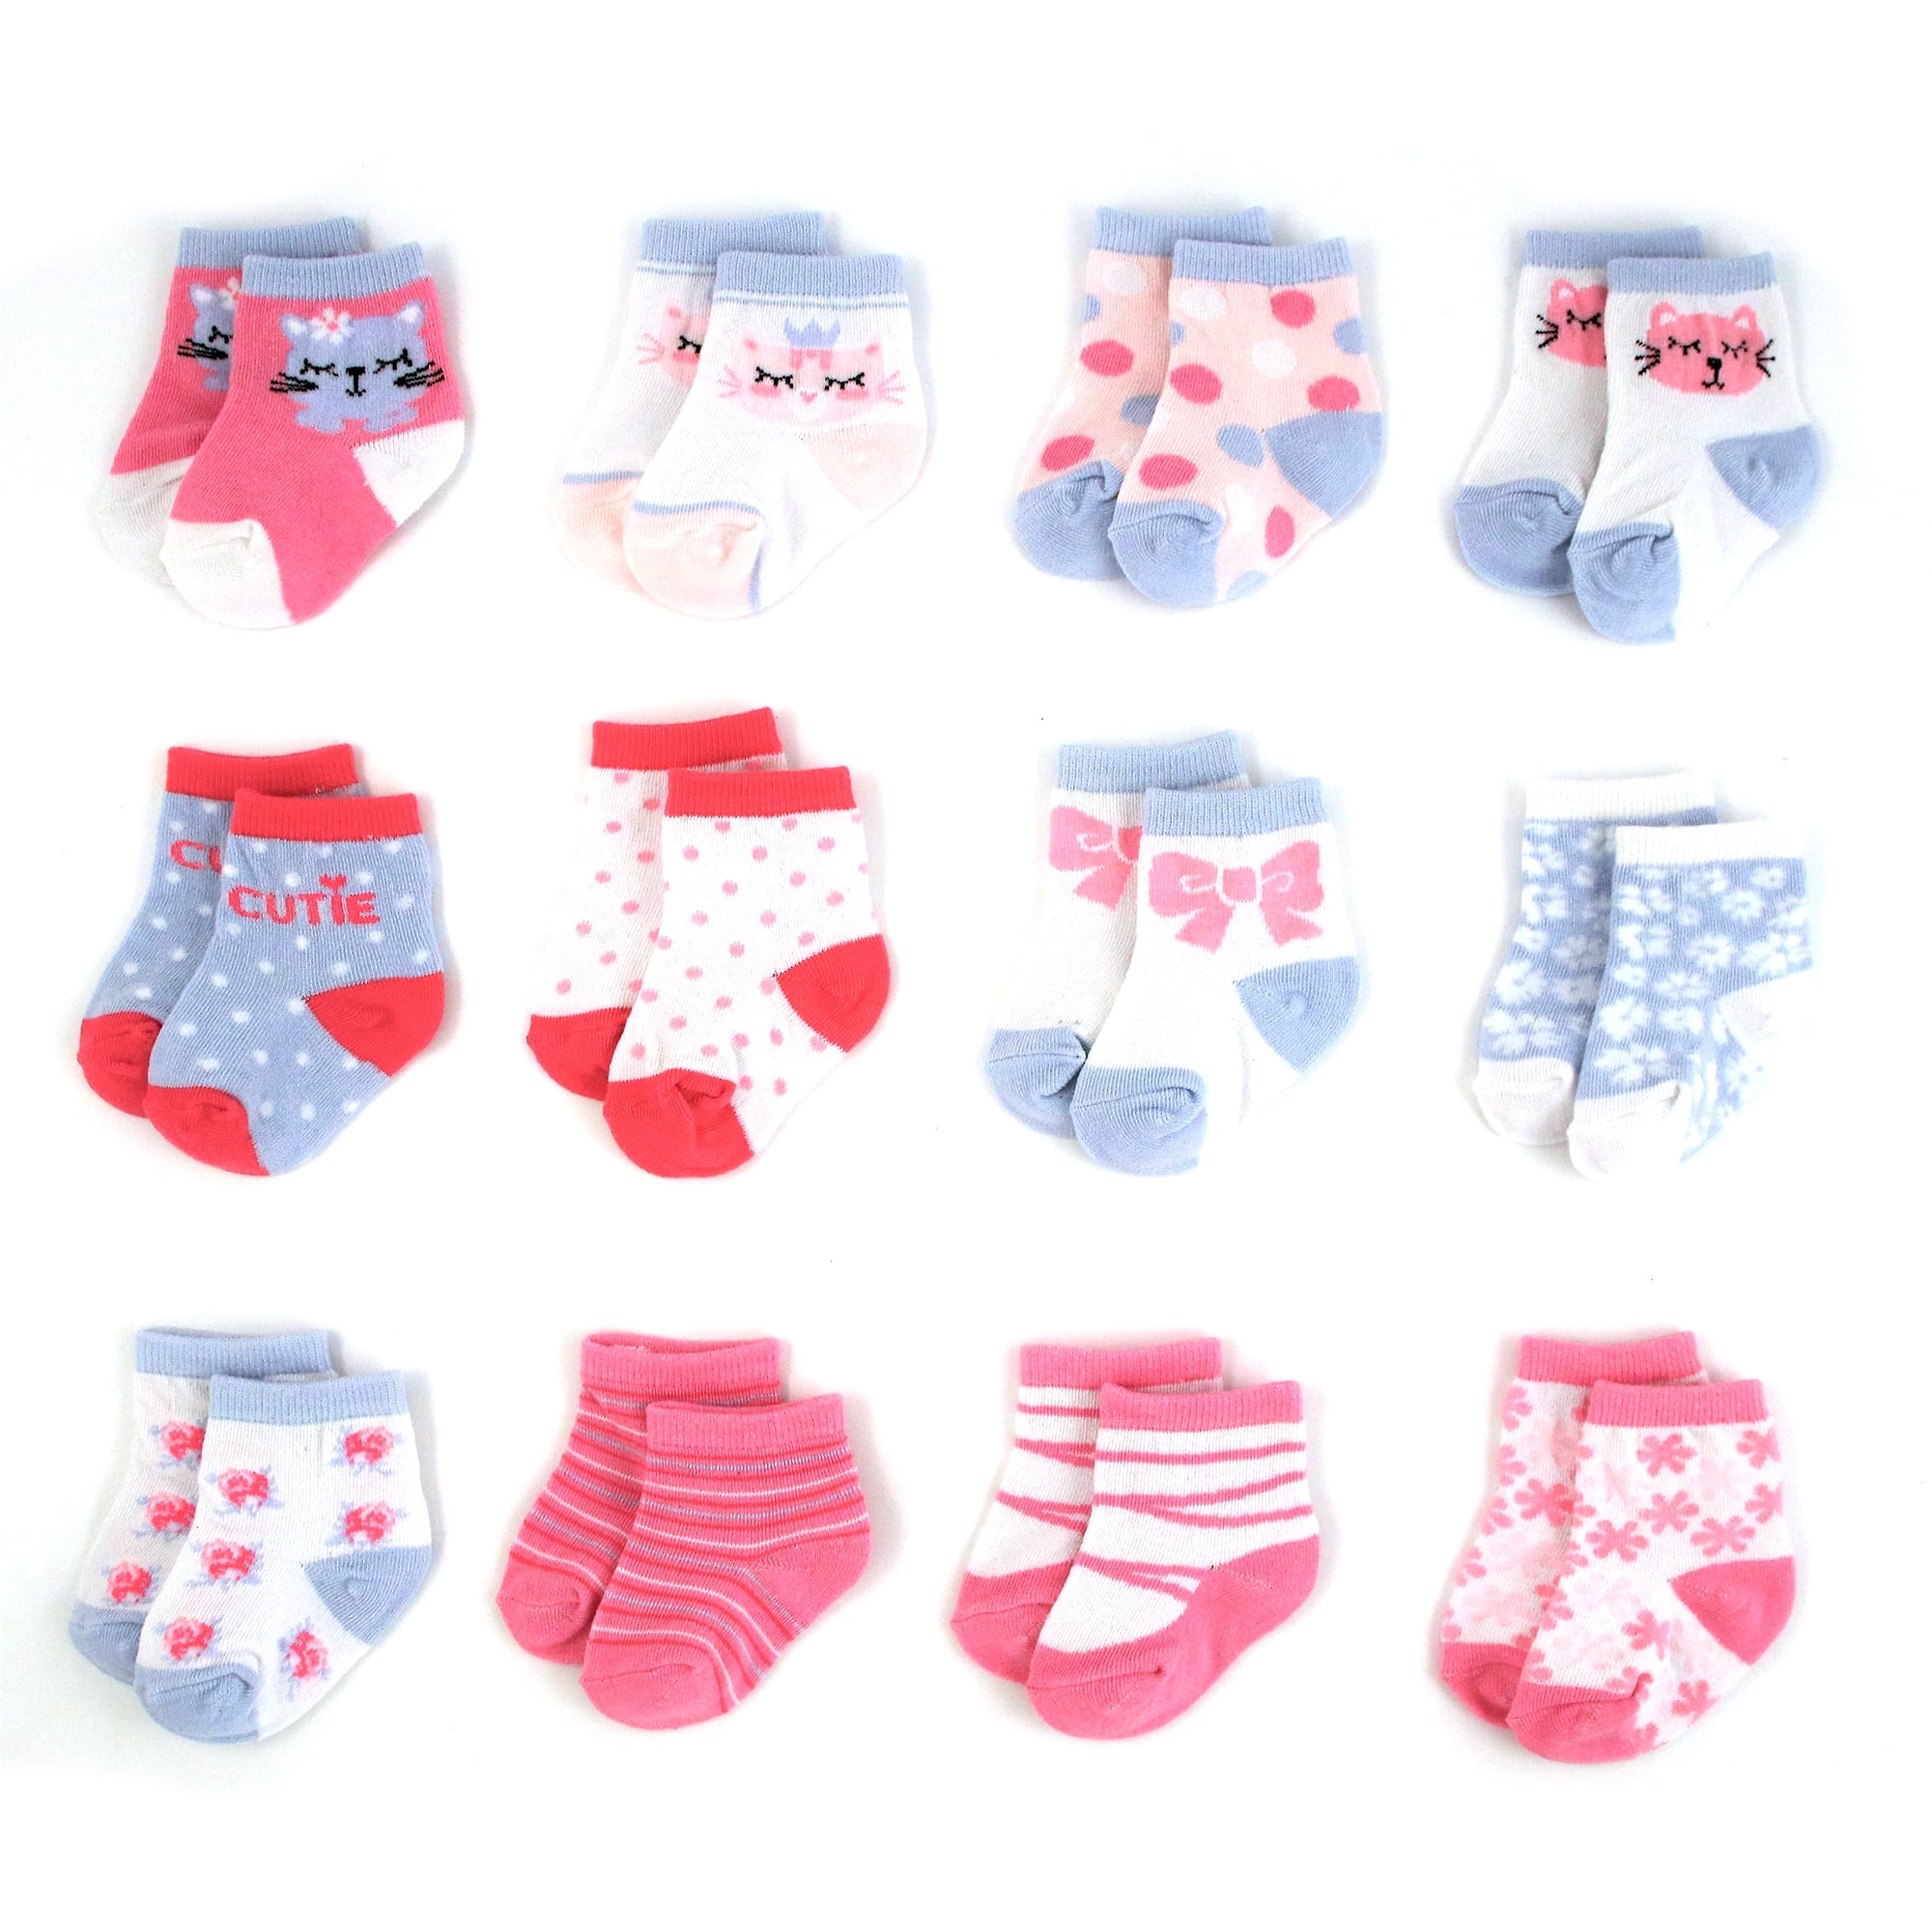 New Women's 12 Pack Cute Fruity Flamingo Unicorn Design Cotton Rich Ankle Socks 